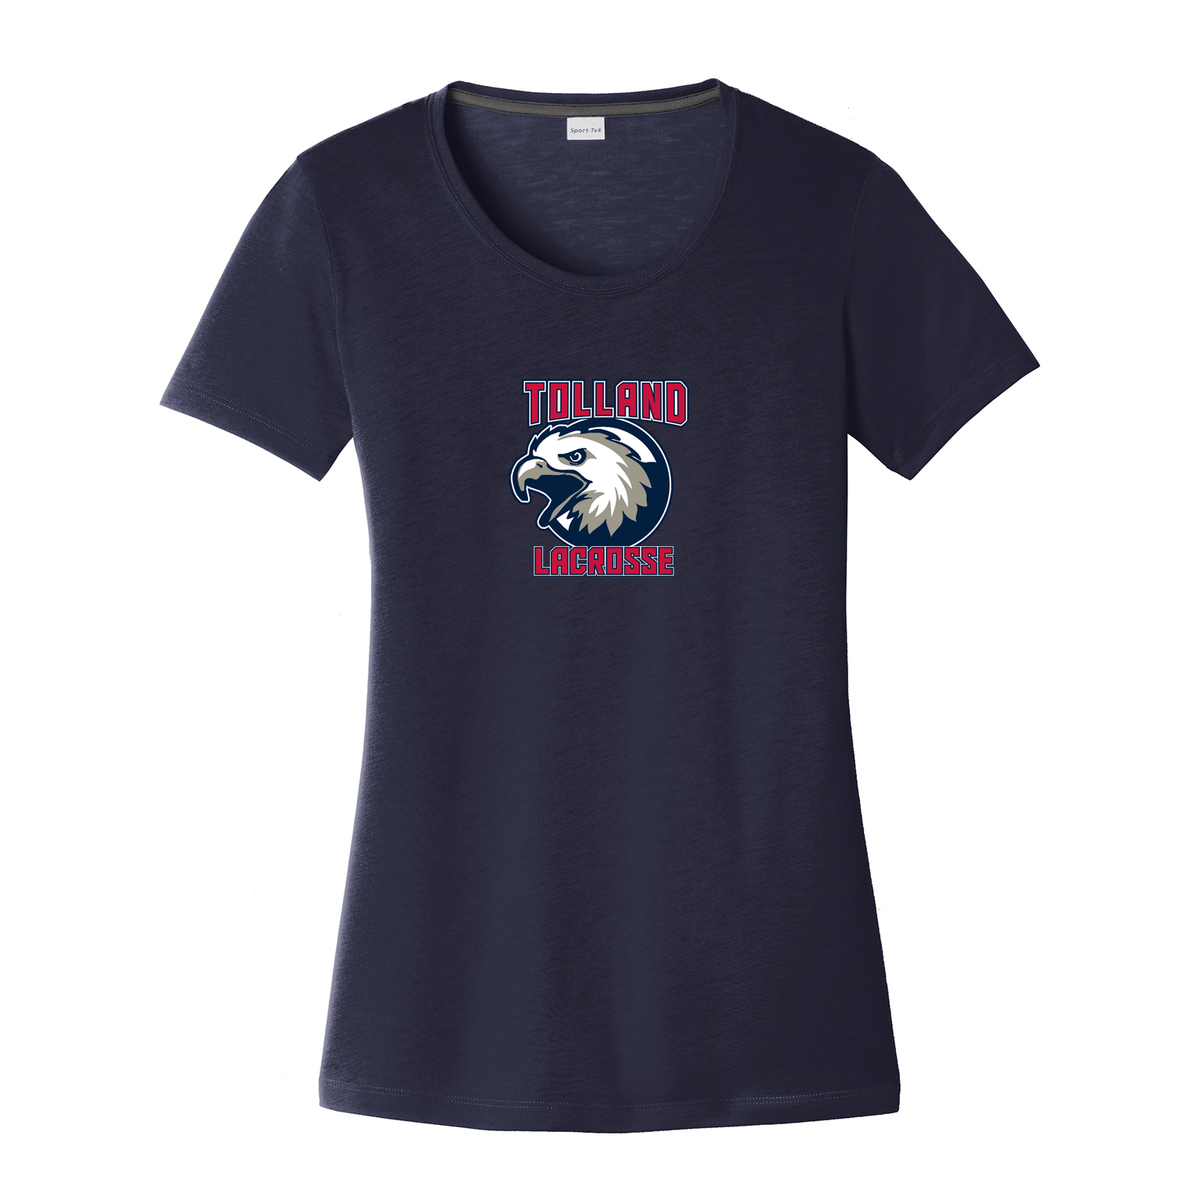 Tolland Lacrosse Club Women's CottonTouch Performance T-Shirt